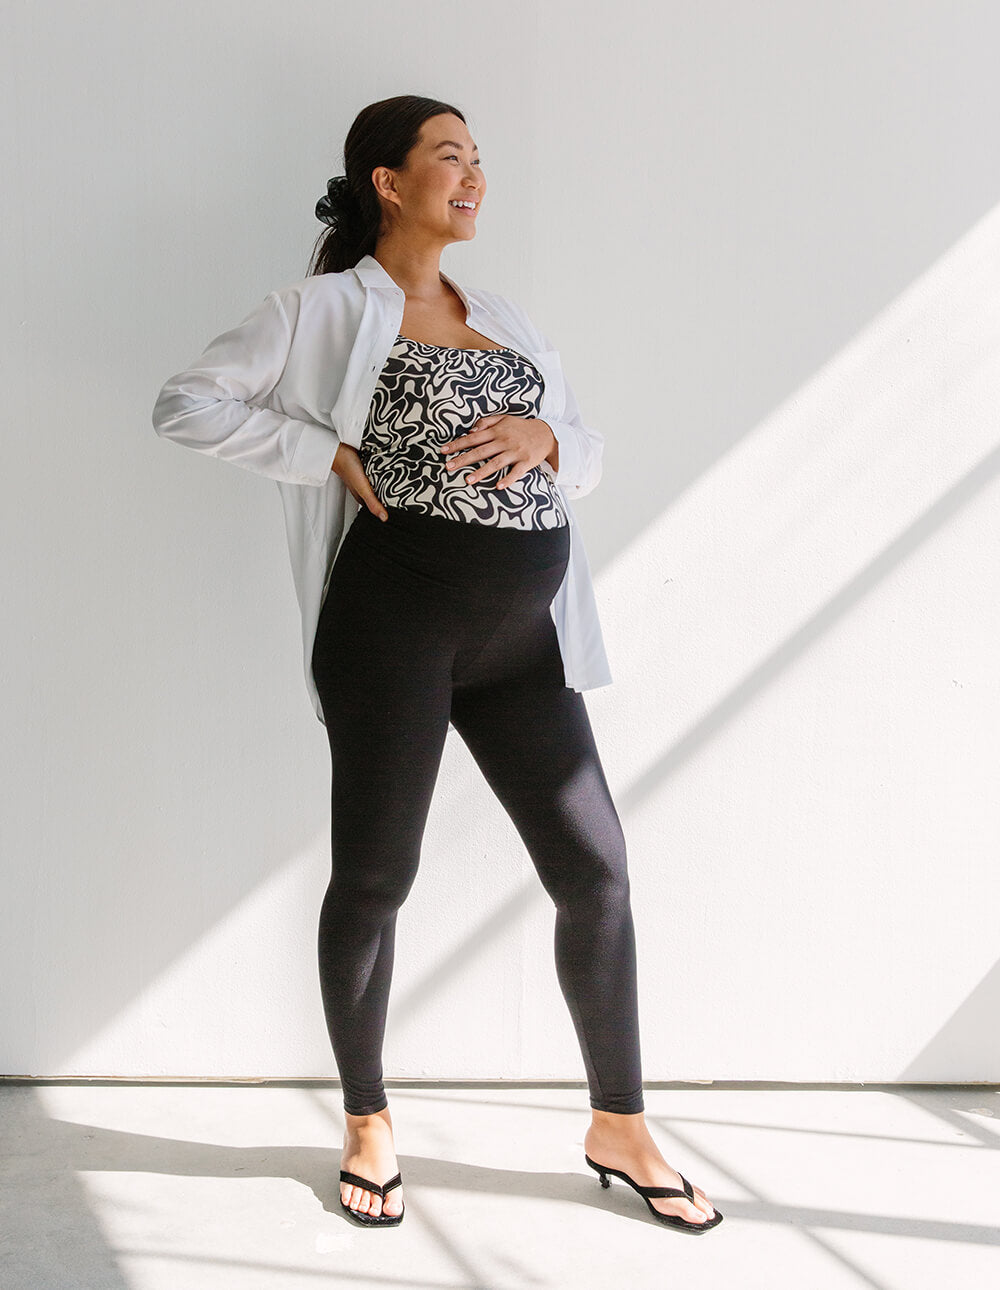 Signature Maternity Leggings In Soft Modal For Pregnancy & Postpartum